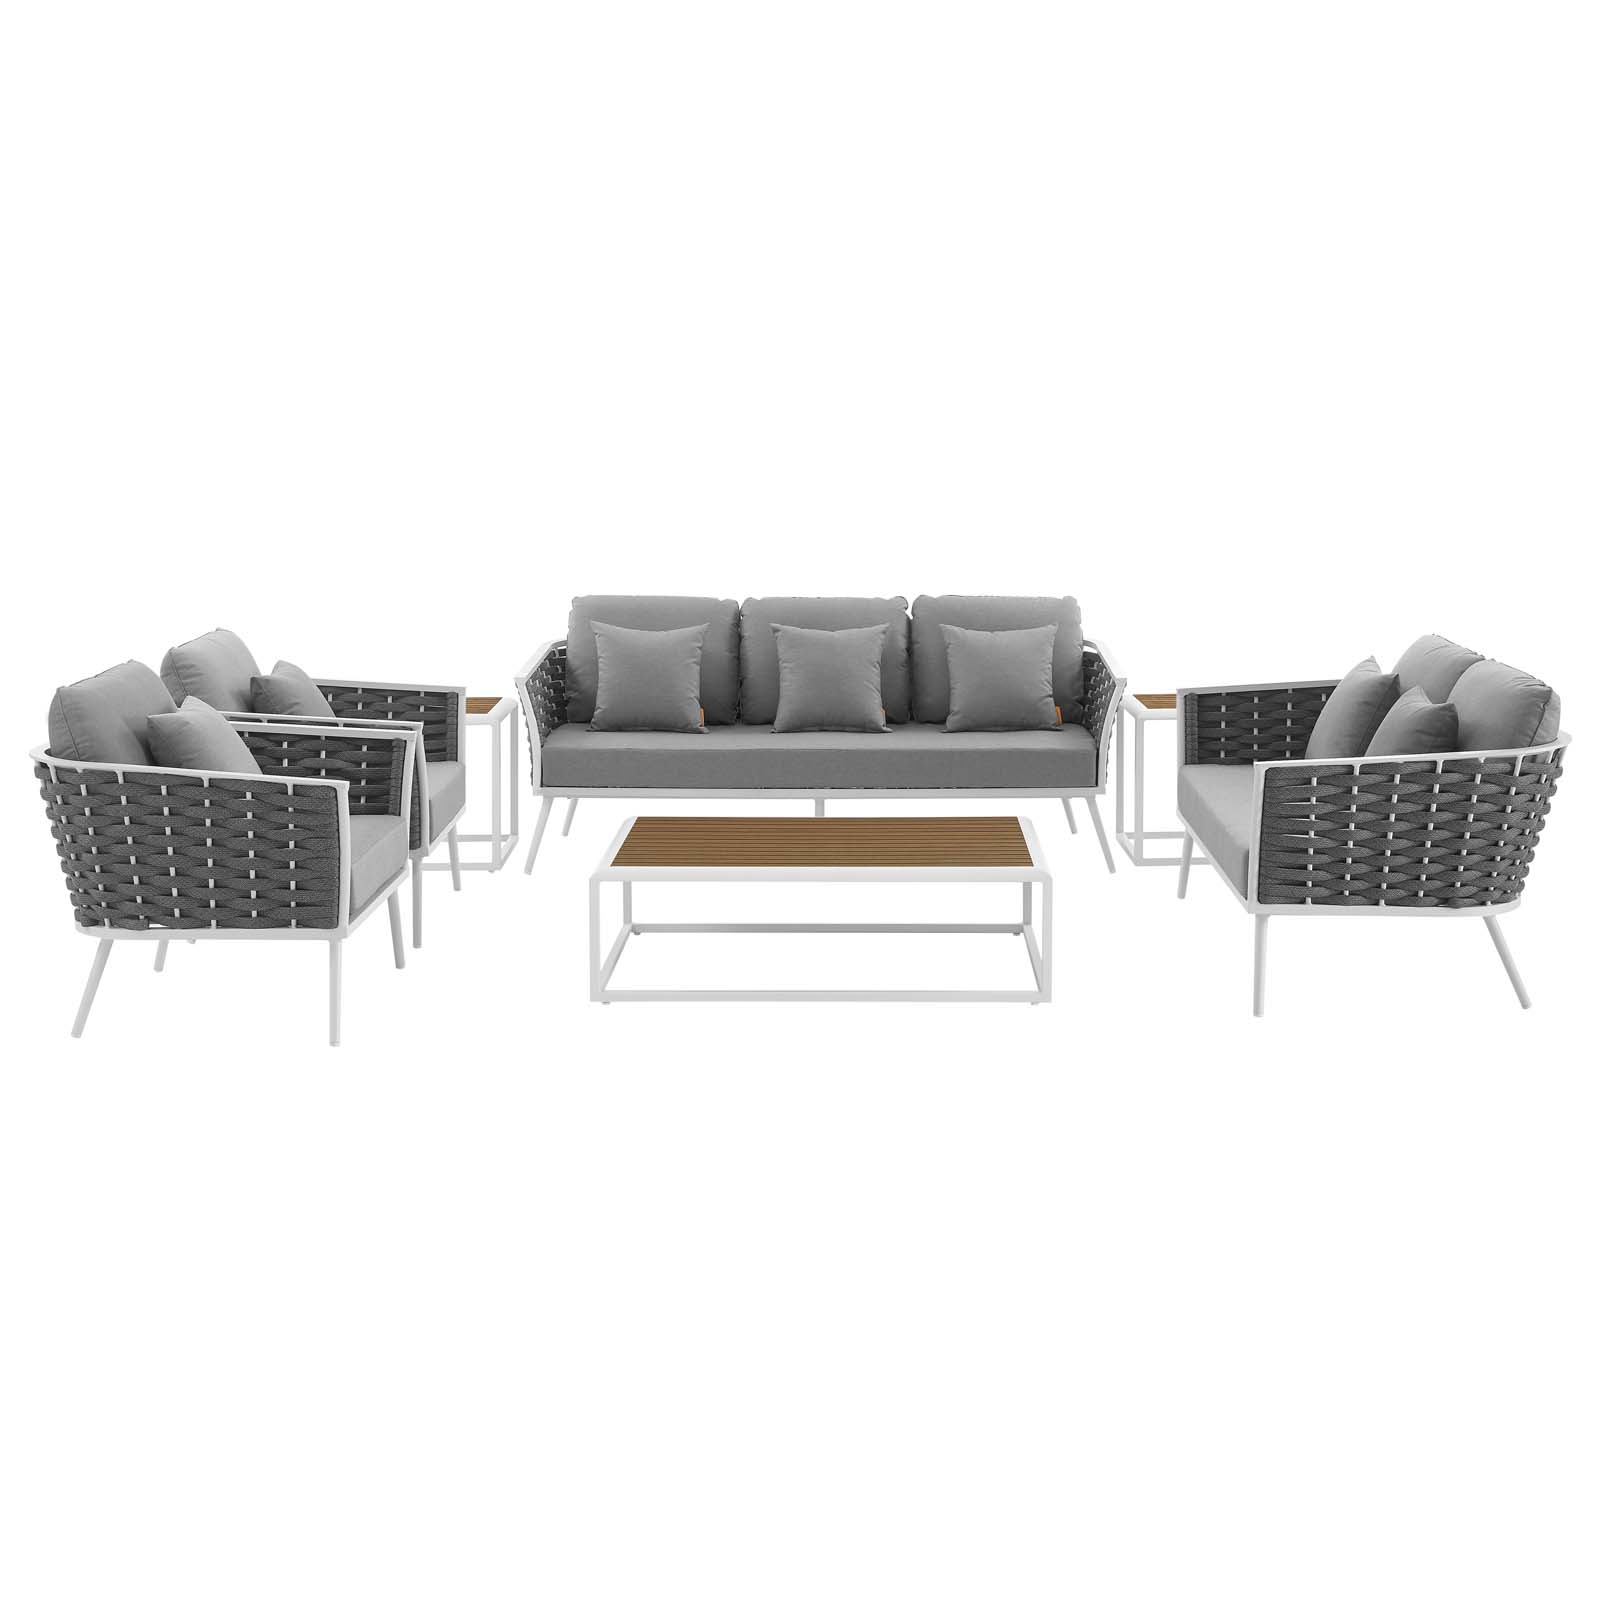 Modern Contemporary Urban Outdoor Patio Balcony Garden Furniture Lounge Chair, Sofa and Table Set, Fabric Aluminium, White Grey Gray - image 4 of 8